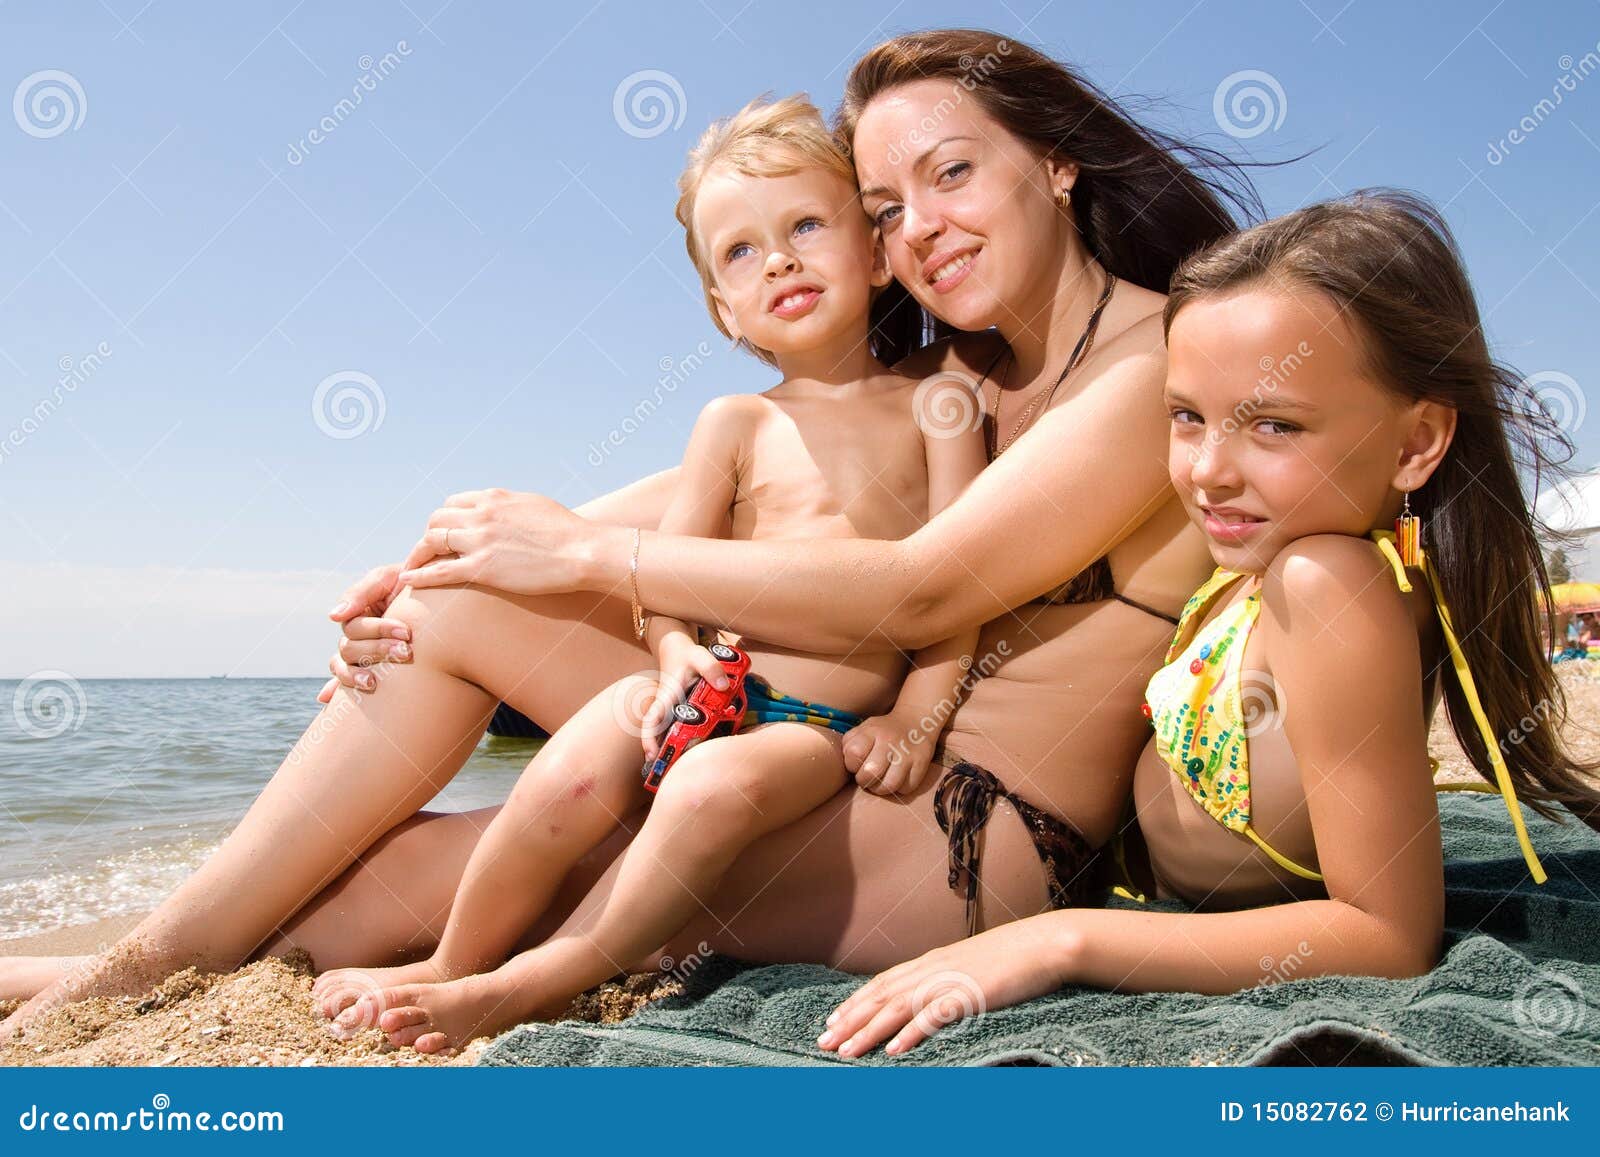 bilawal hussain recommends nudist family beach fun pic